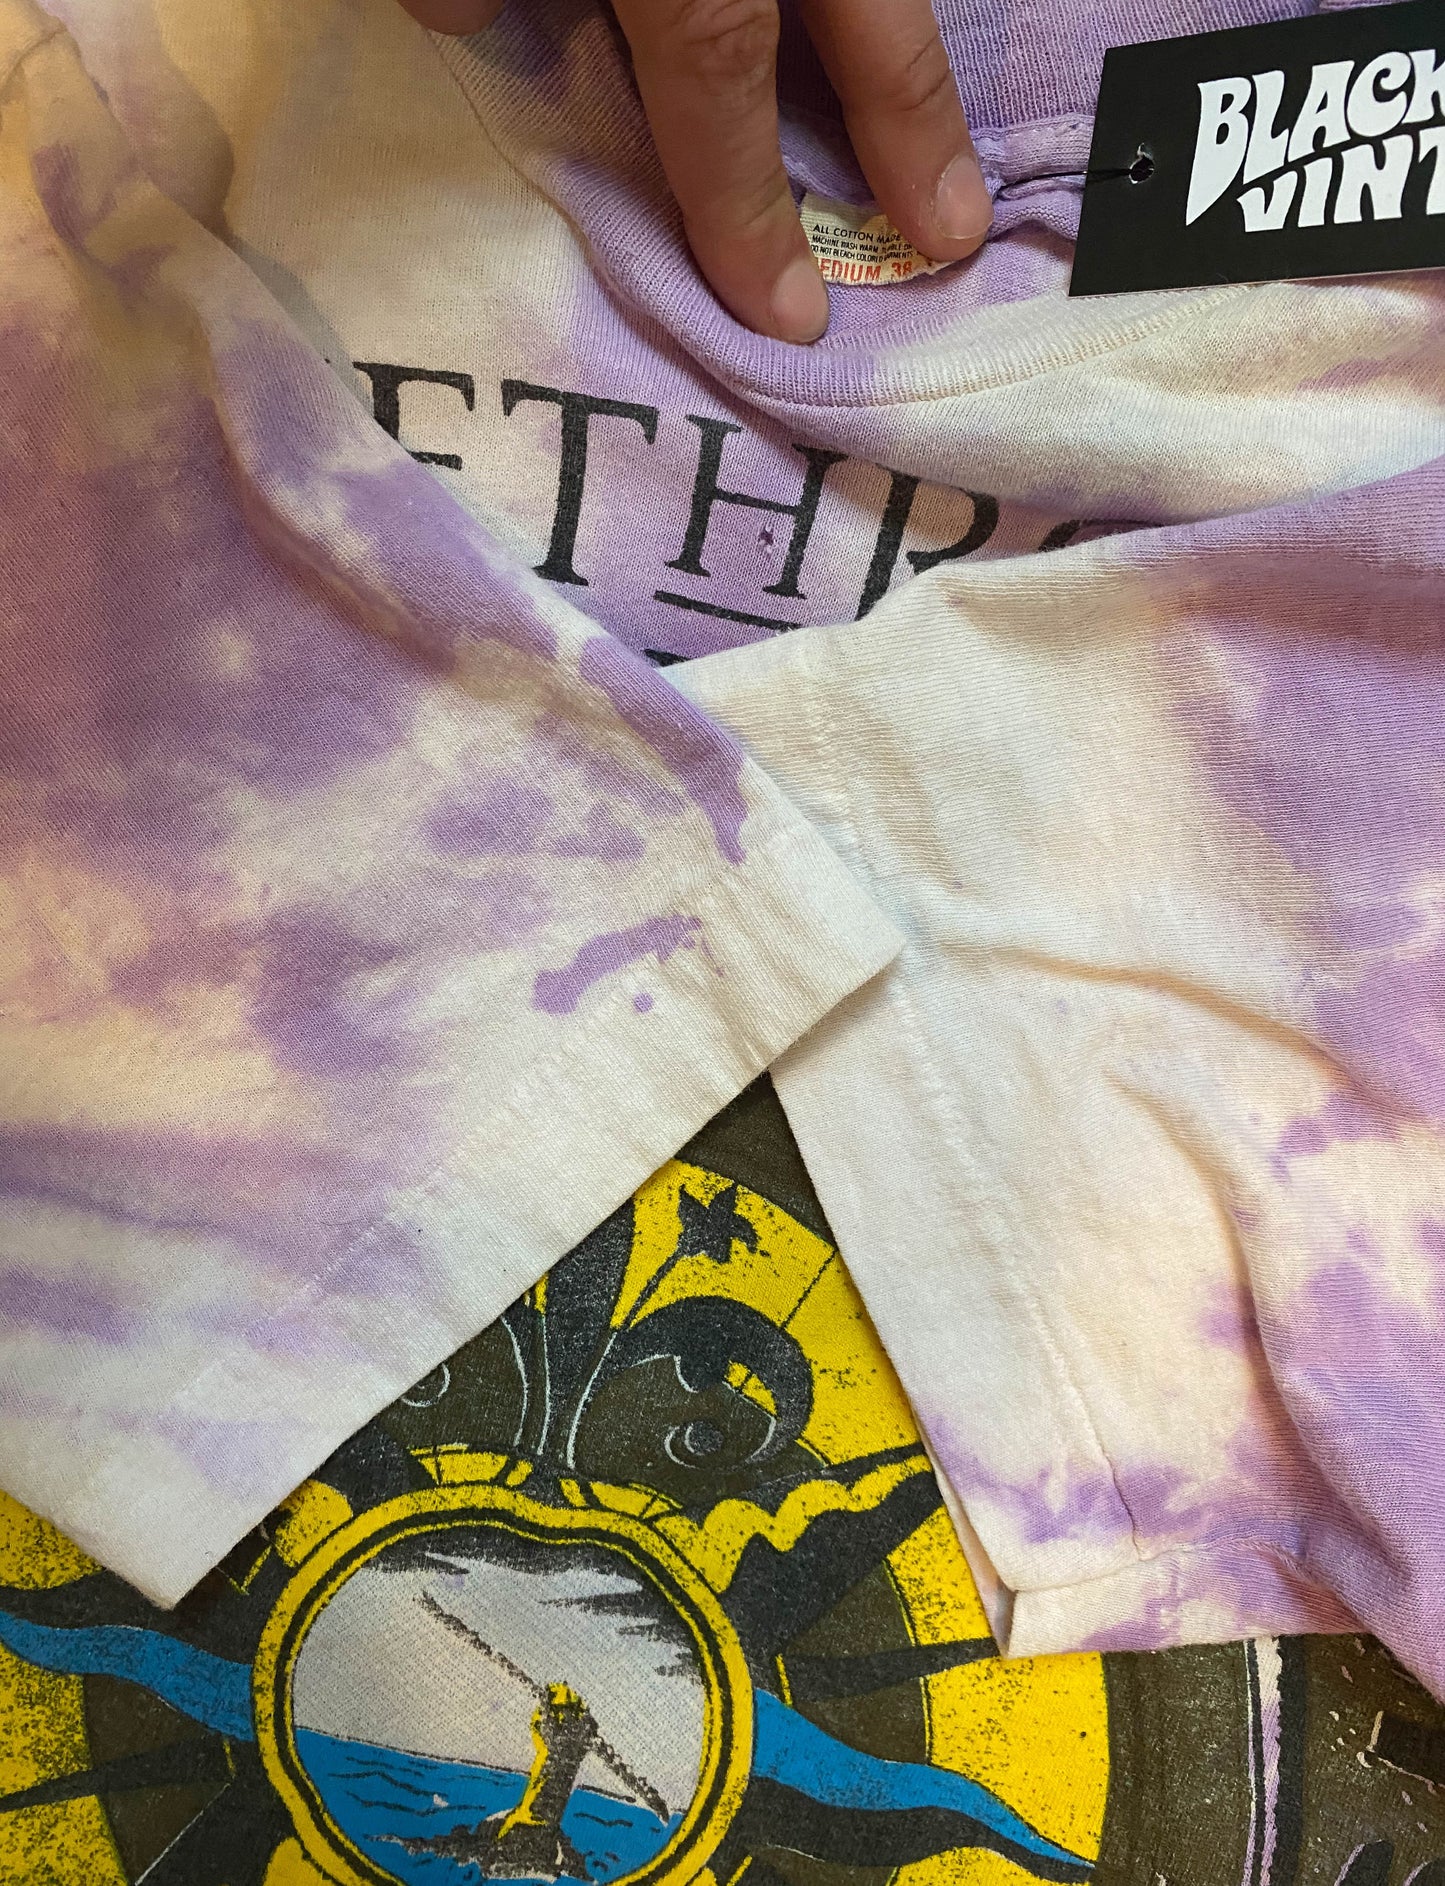 Vintage 1988 Jethro Tull Concert T Shirt 20 Years Tour Purple Tie Dye Unisex Small